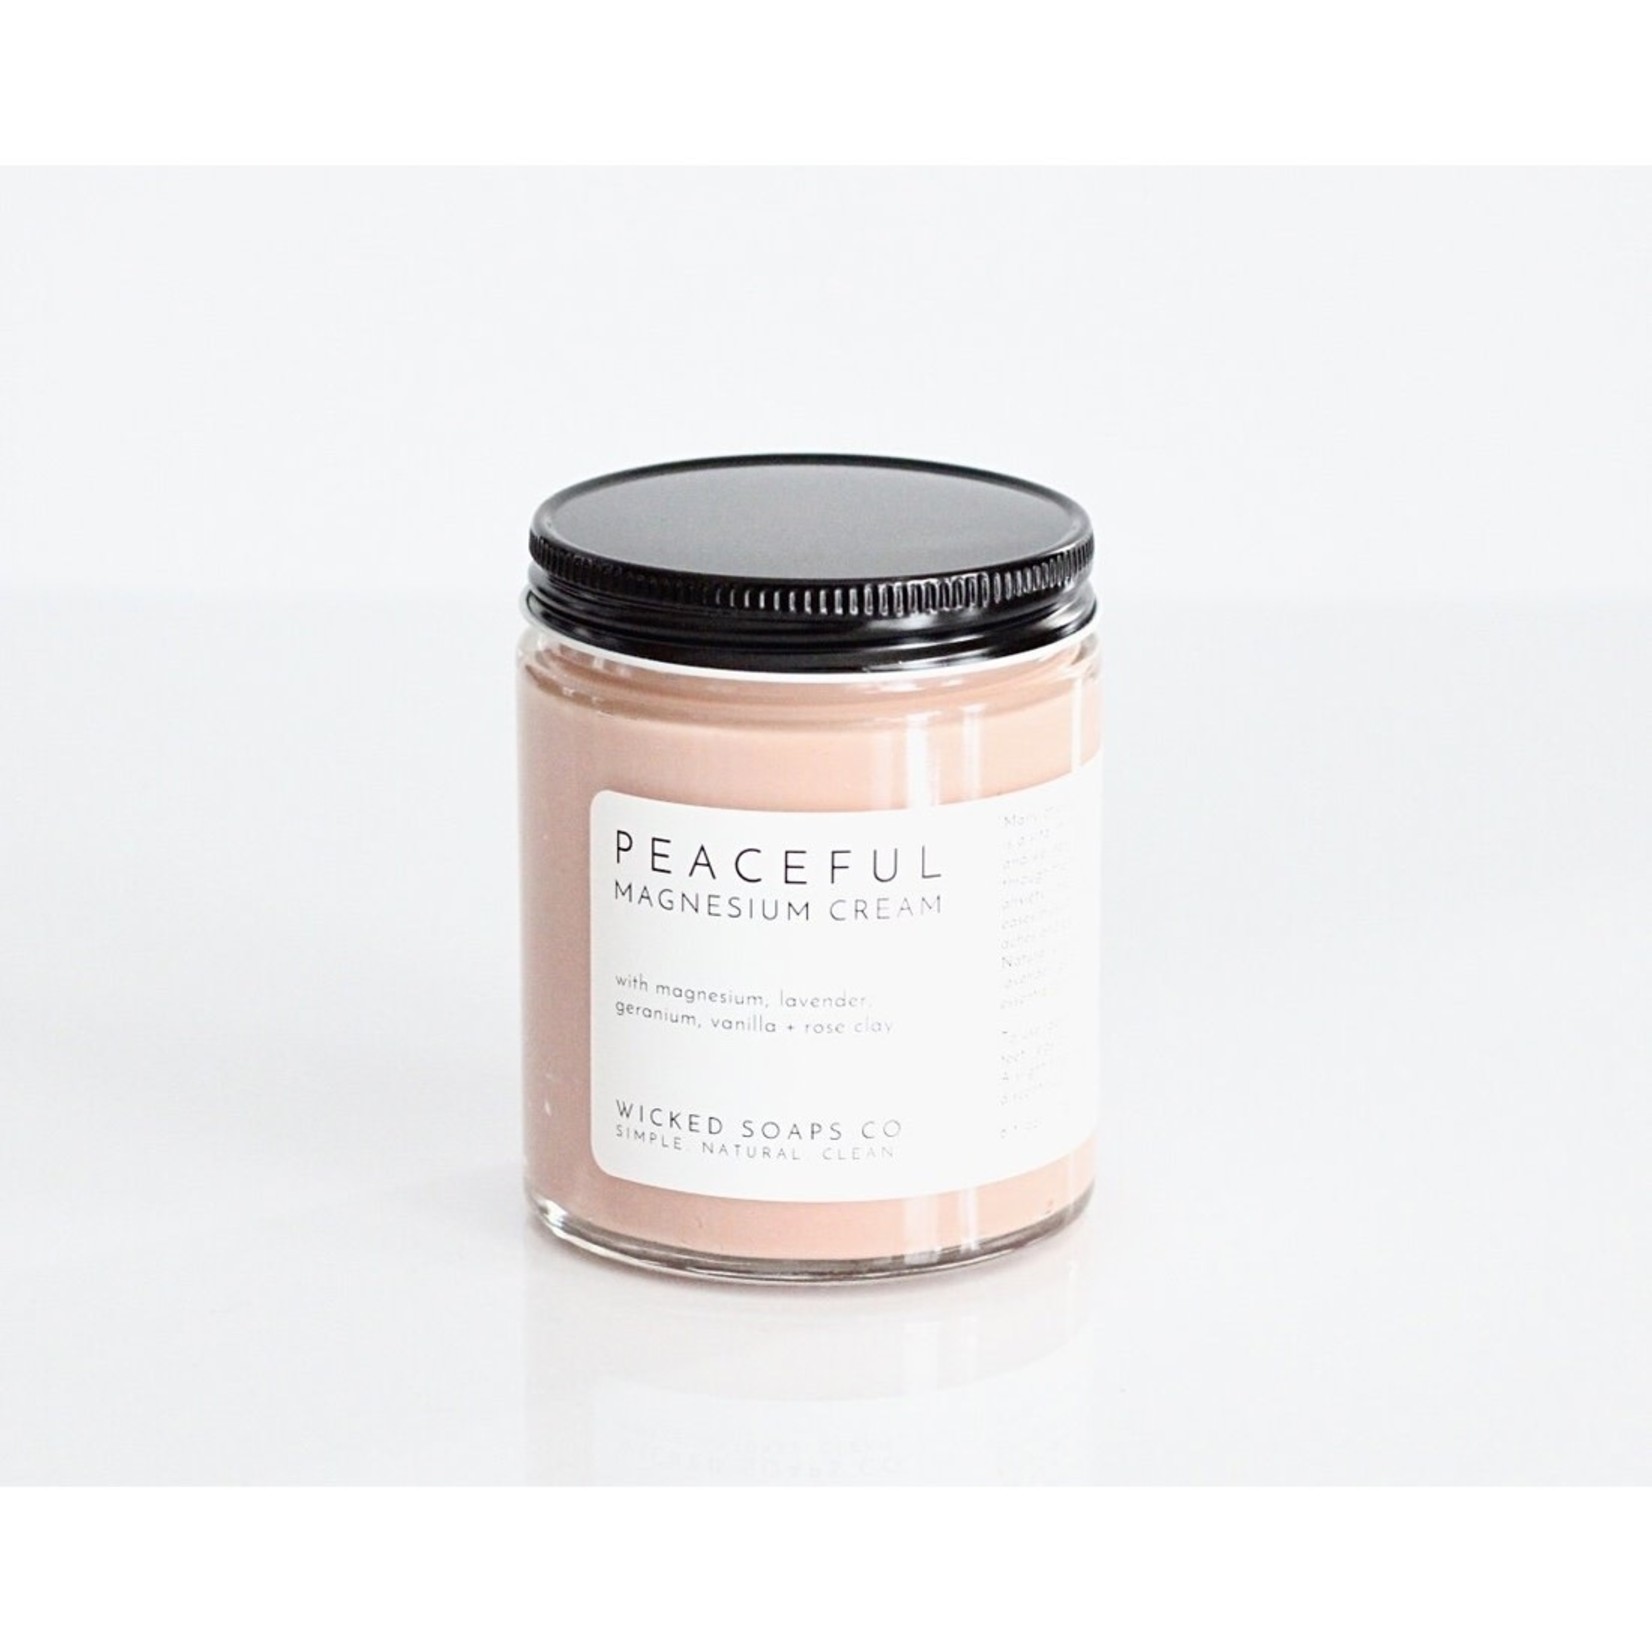 Wicked Soaps Co. Peaceful Magnesium Cream